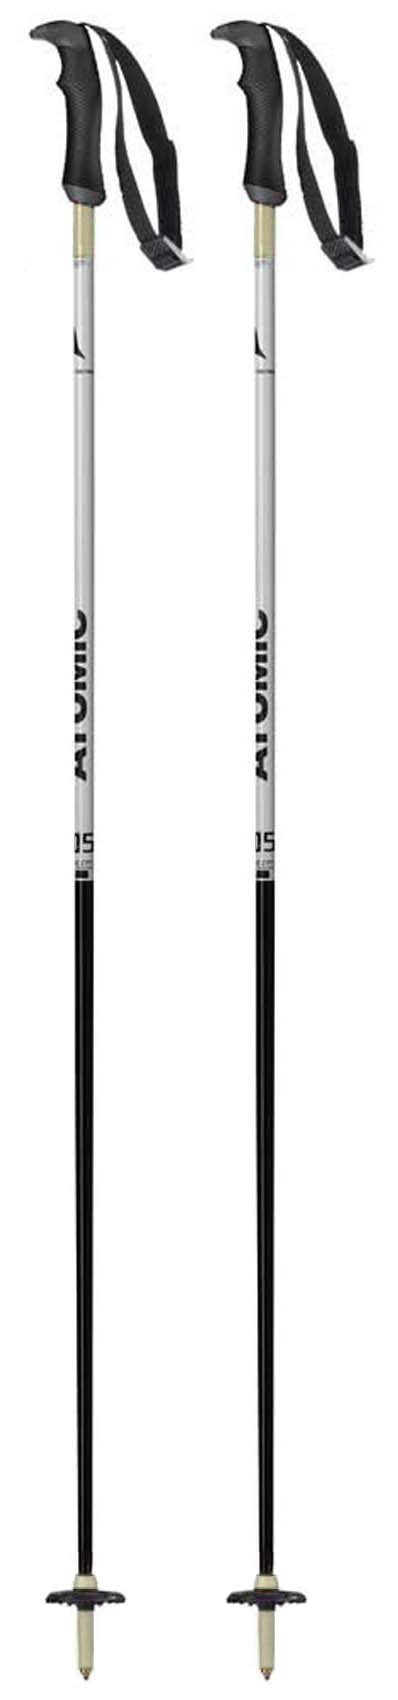 Atomic 2021 Composite Rental Adult Ski Poles NEW !! 105mm